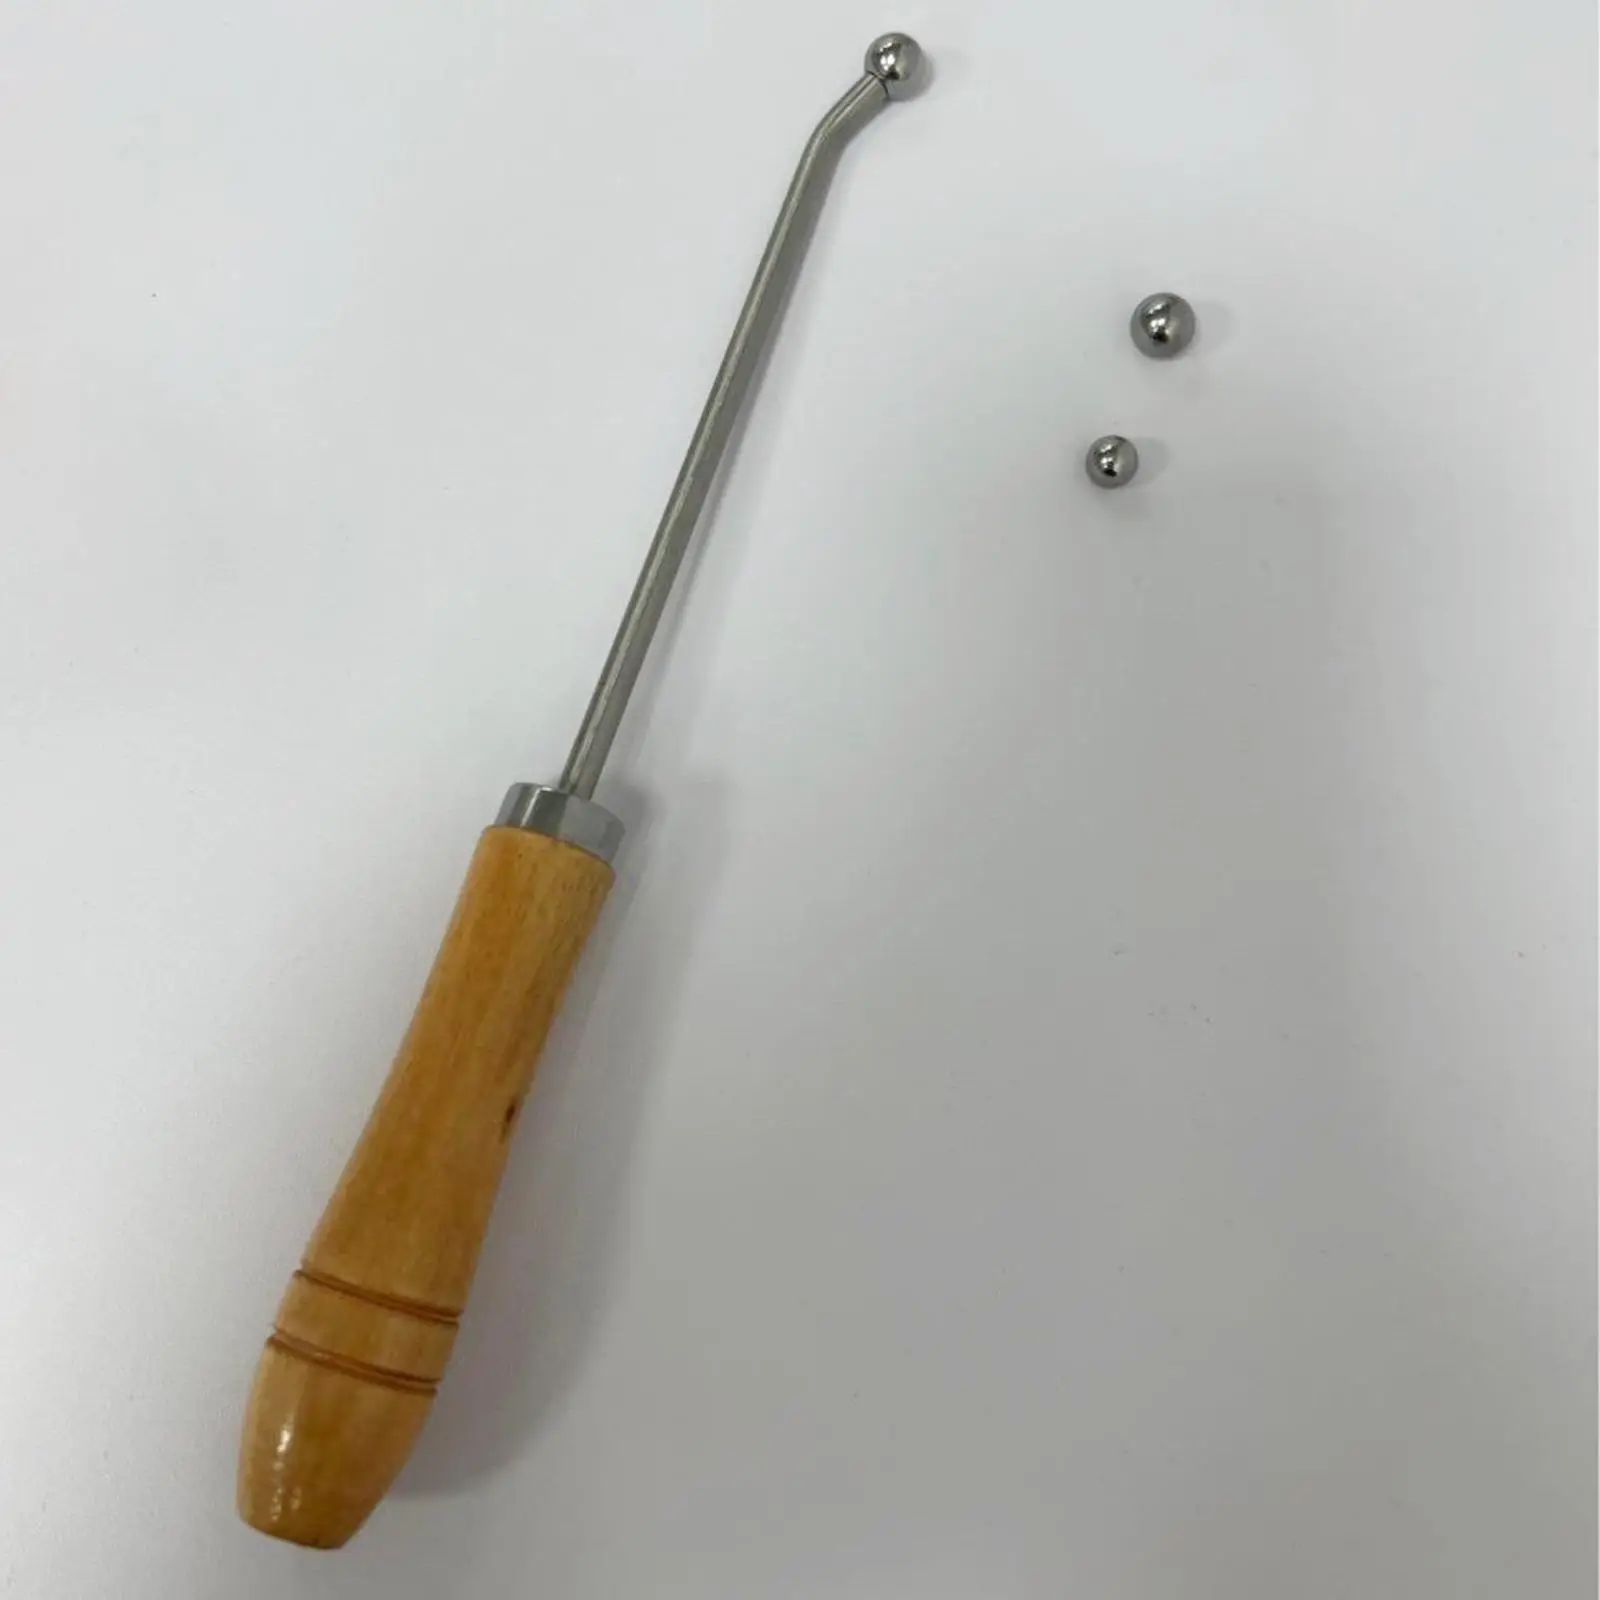 Trumpet Repair Handle Wood Handle Portable with Repair Wrench Trumpet Repair Tools for Trumpet